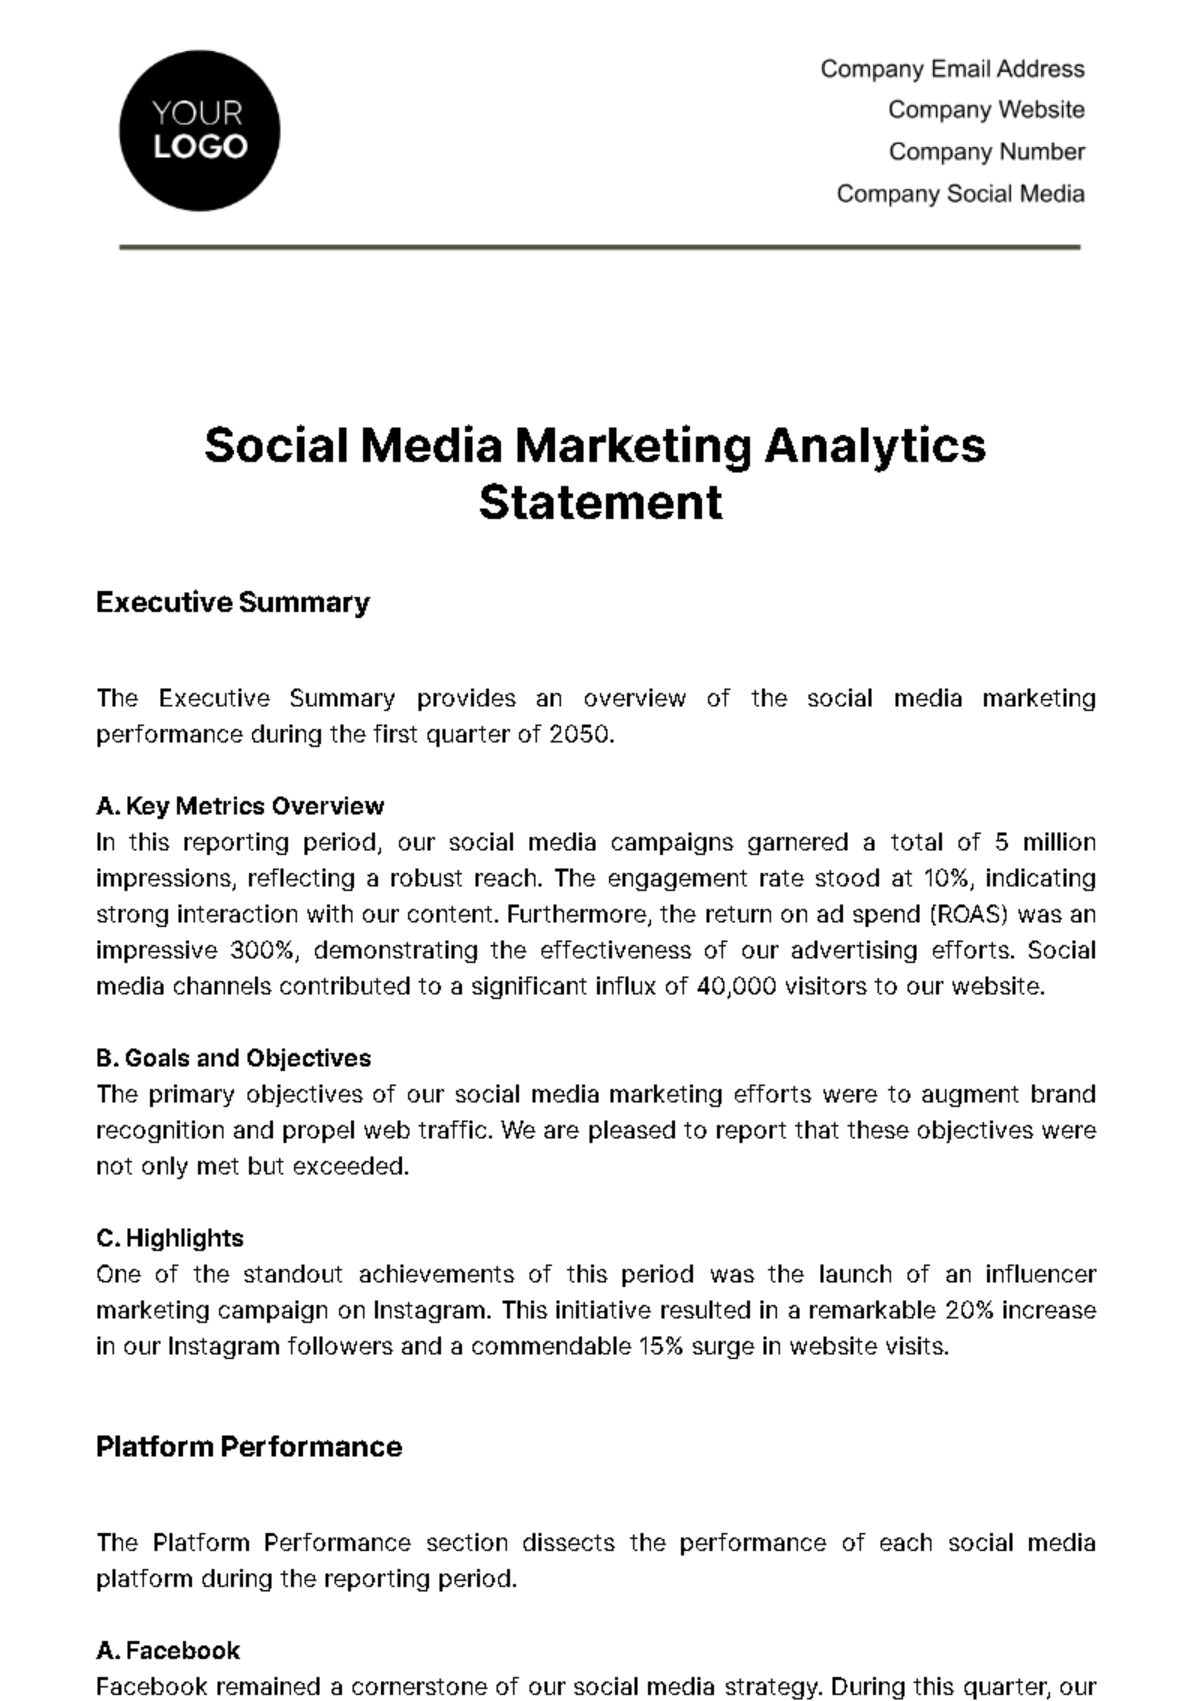 Free Social Media Marketing Analytics Statement Template